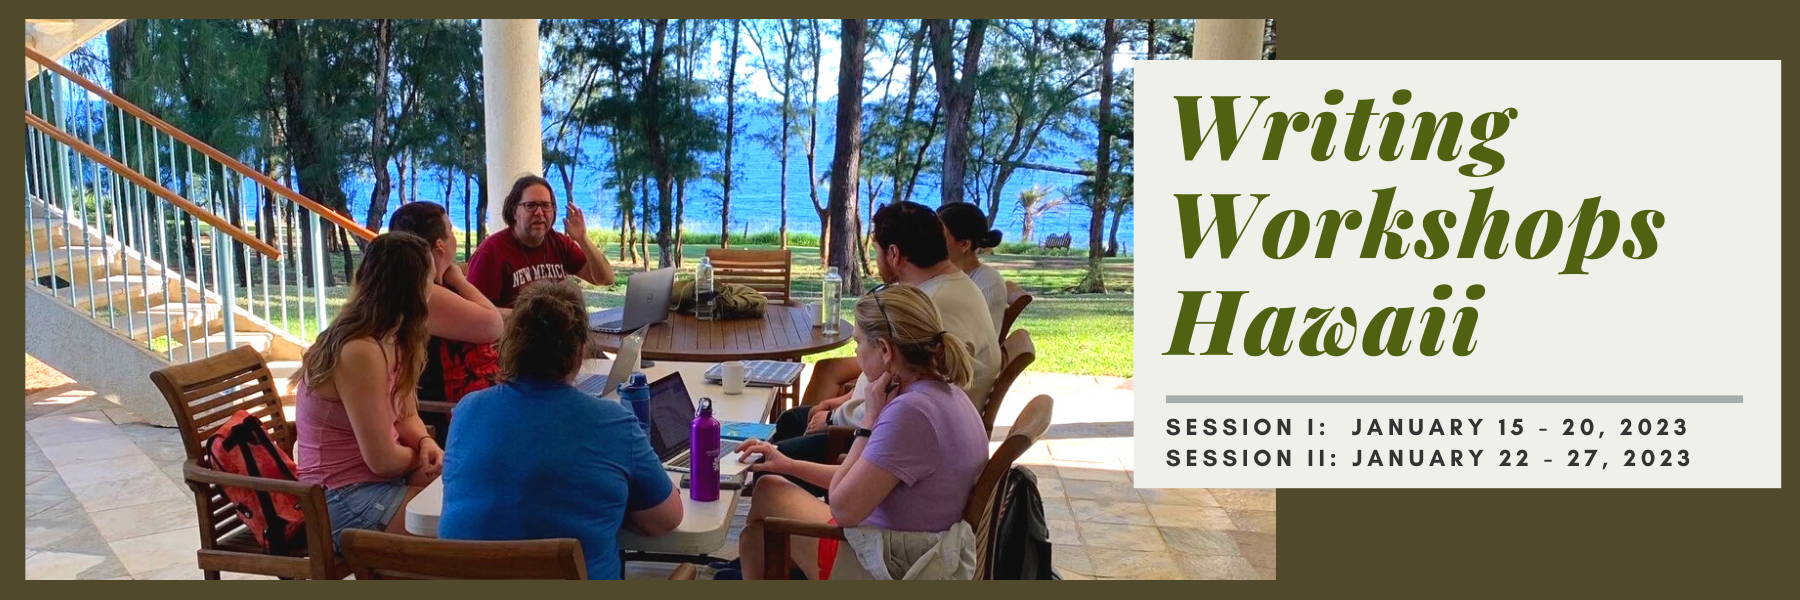 Writing Workshops Hawaii 2023